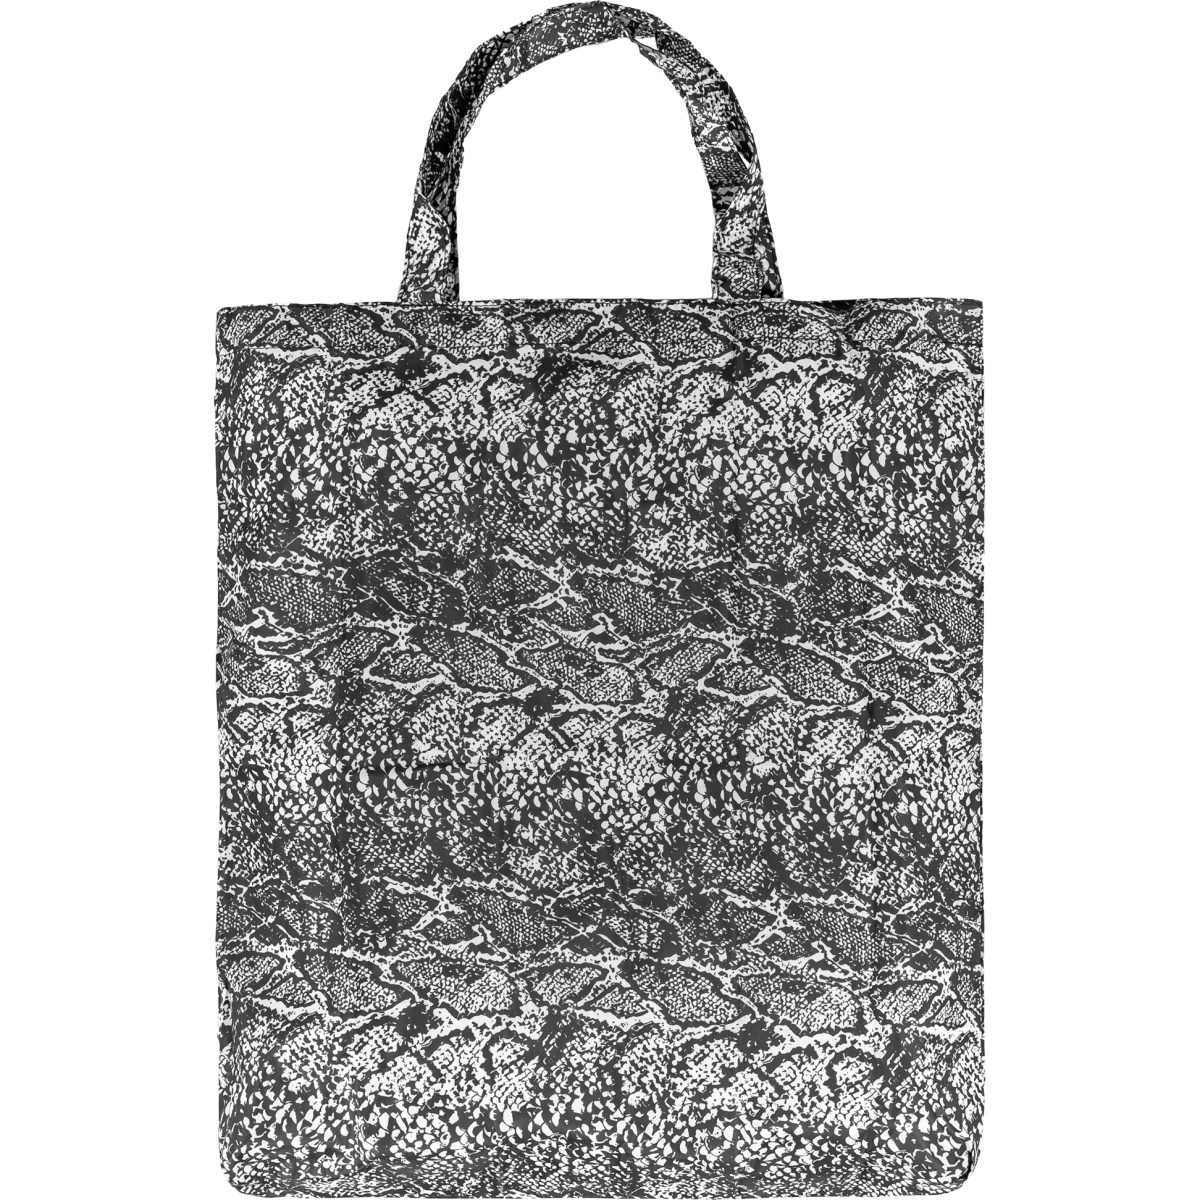 Snake Print Reusable Shopping Bag (CB019)